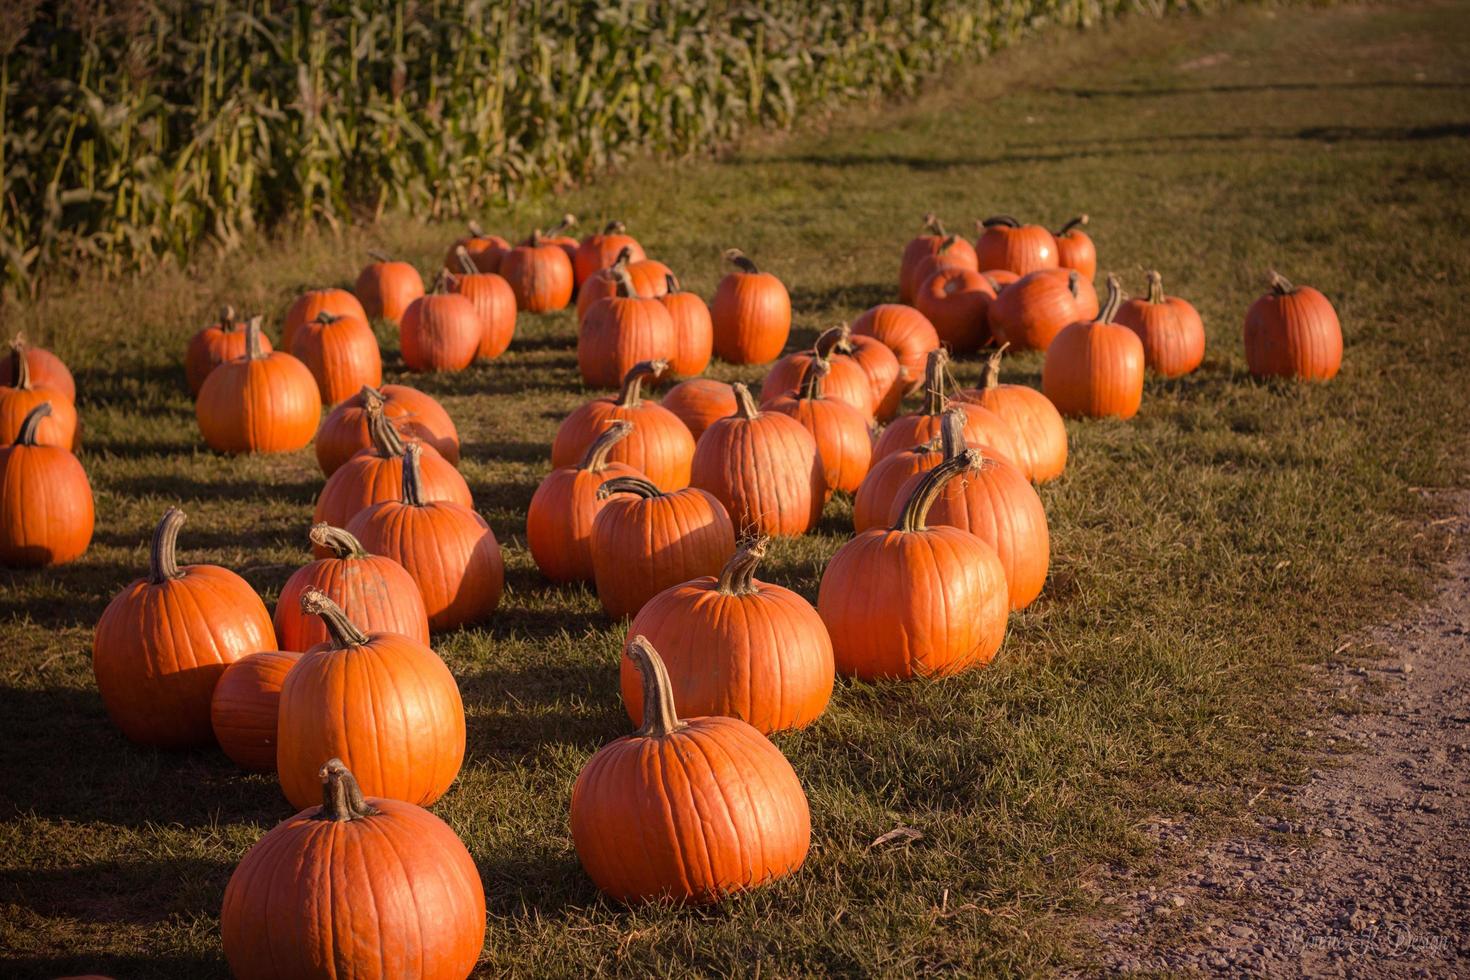 Field of pumpkins photo